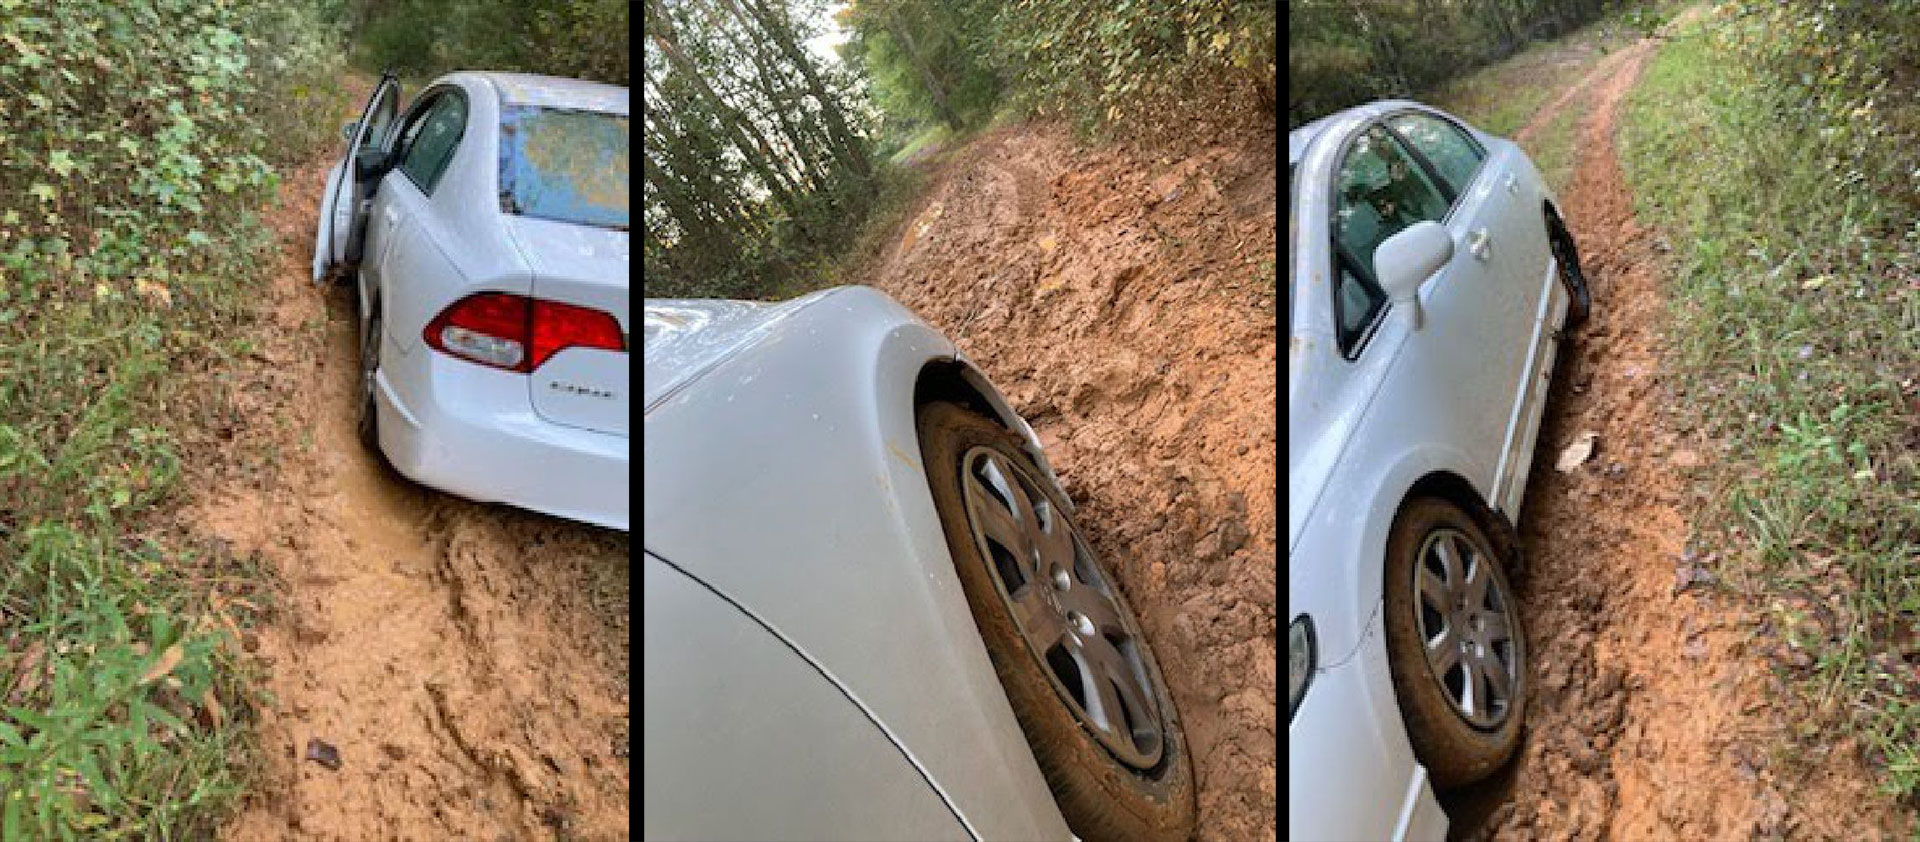 Honda Accord in mud in Alabama